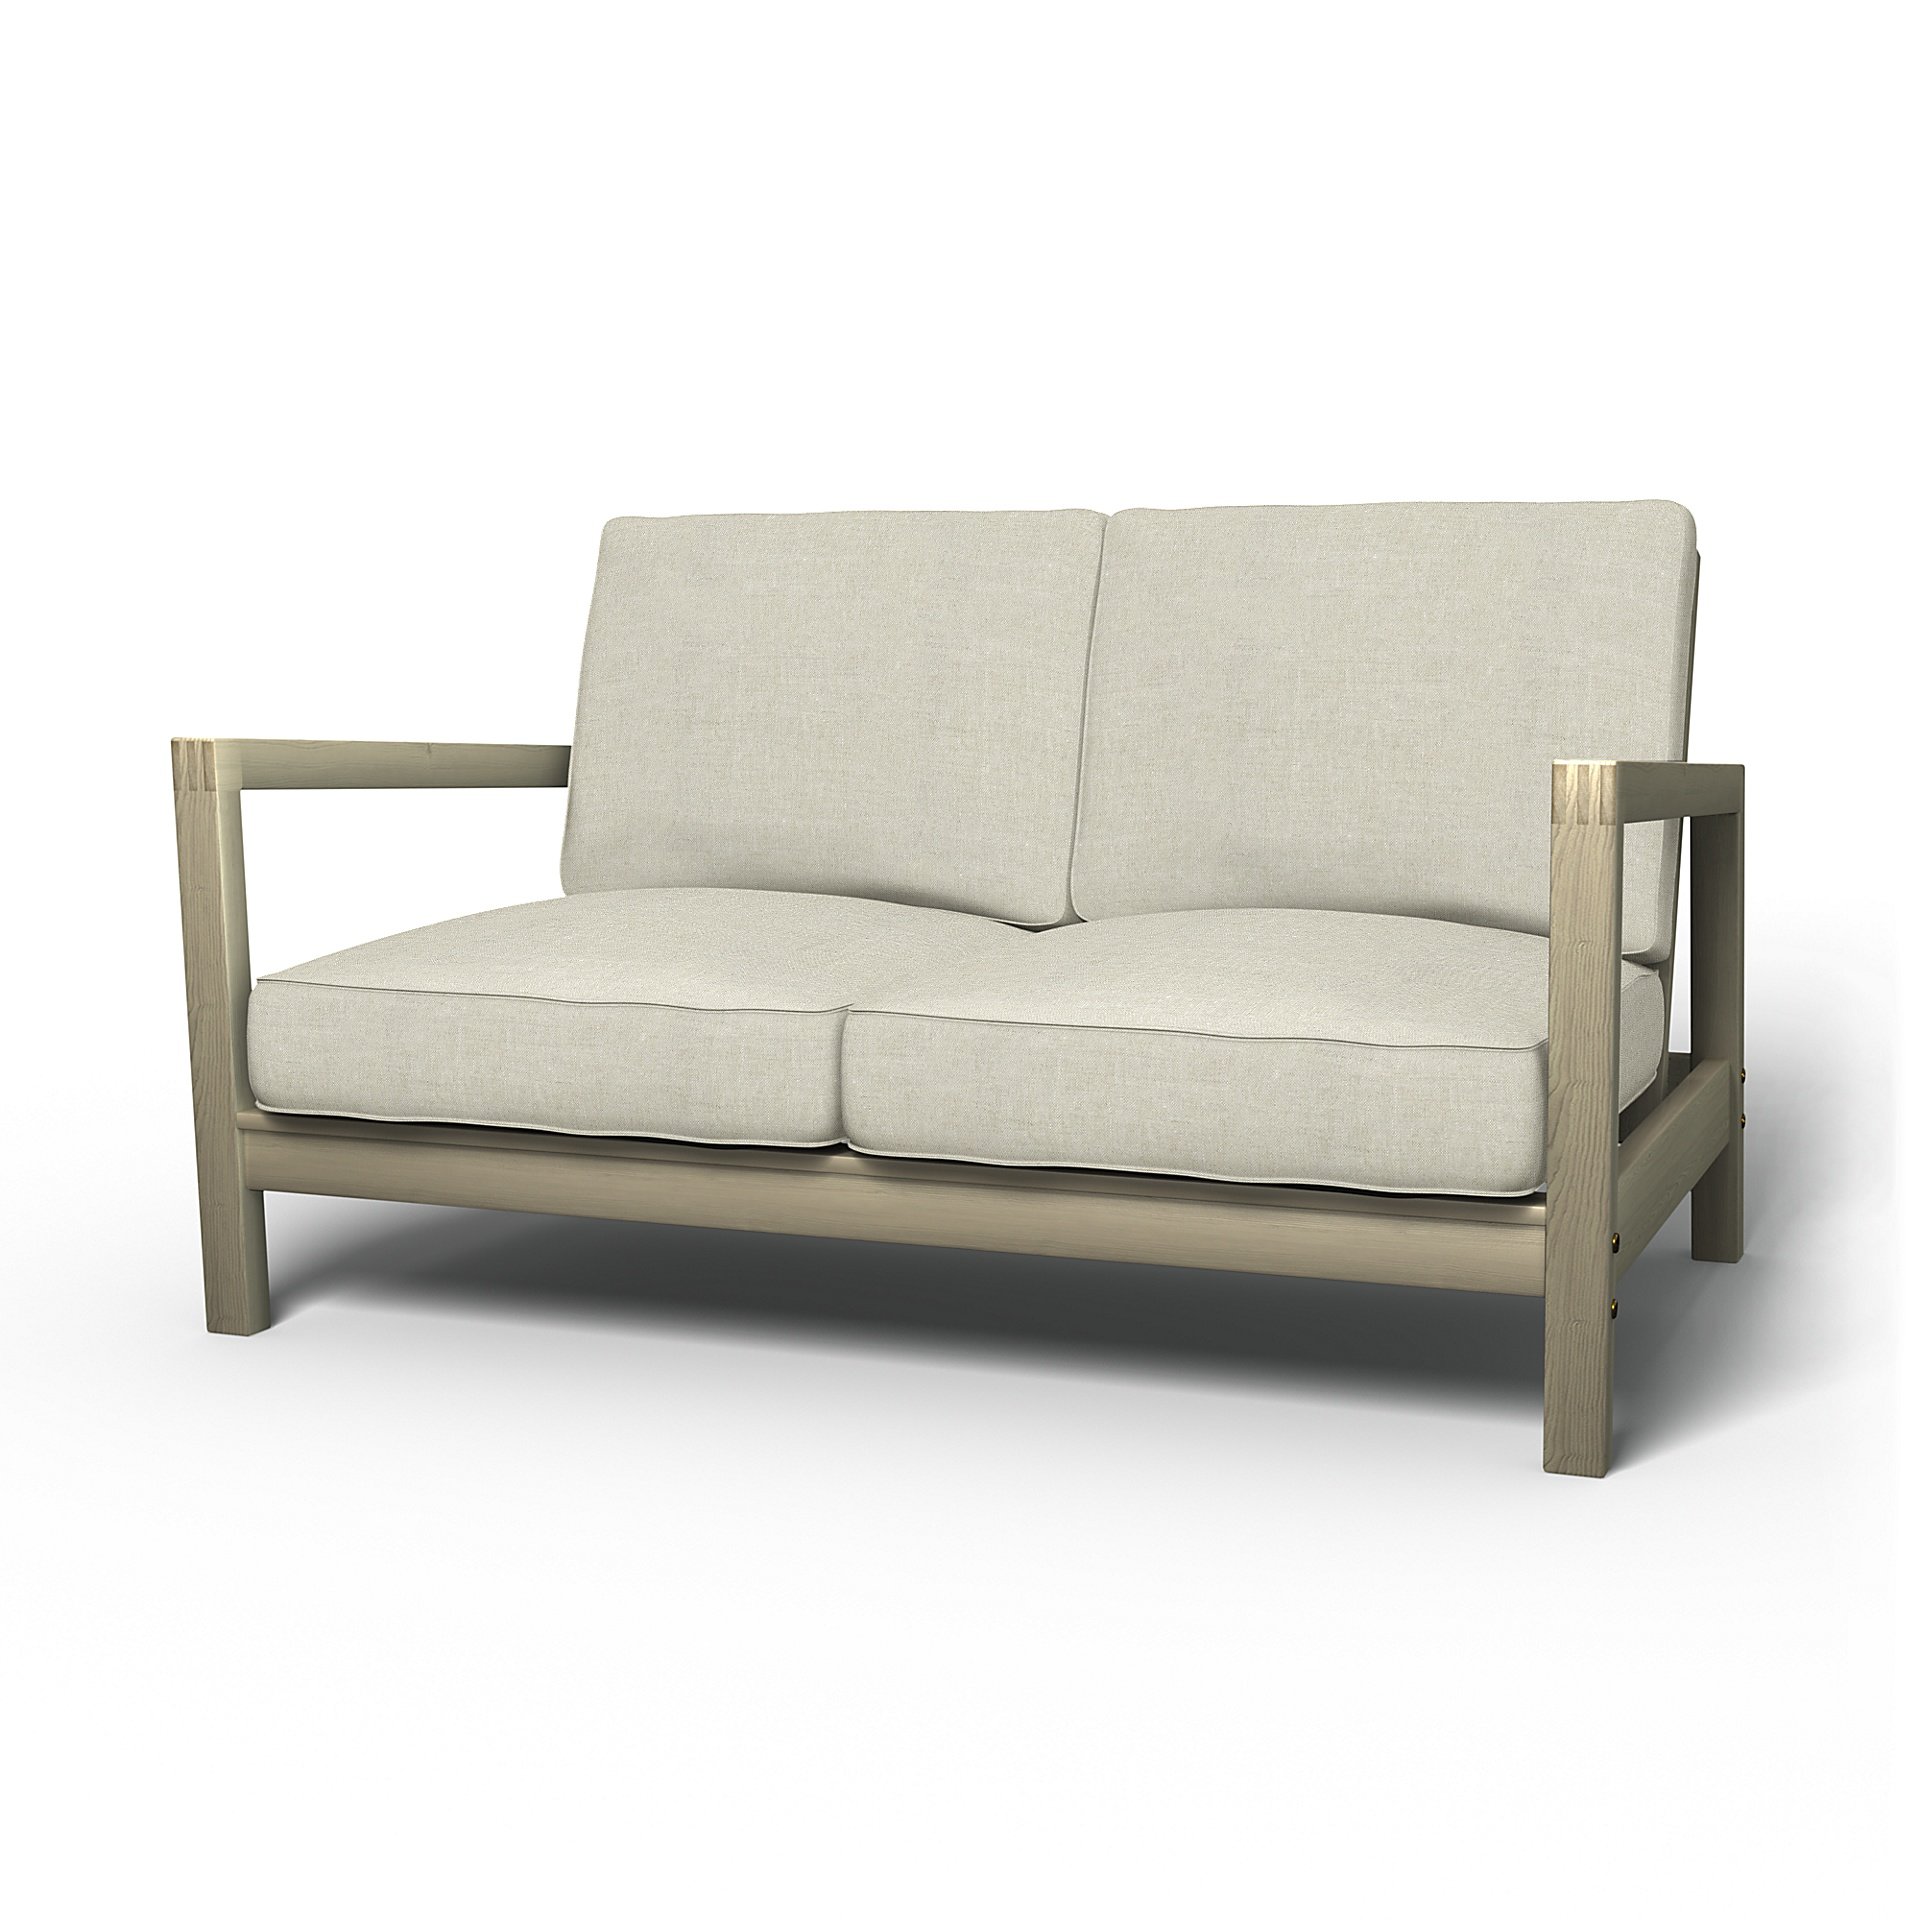 IKEA - Lillberg 2 Seater Sofa Cover, Natural, Linen - Bemz